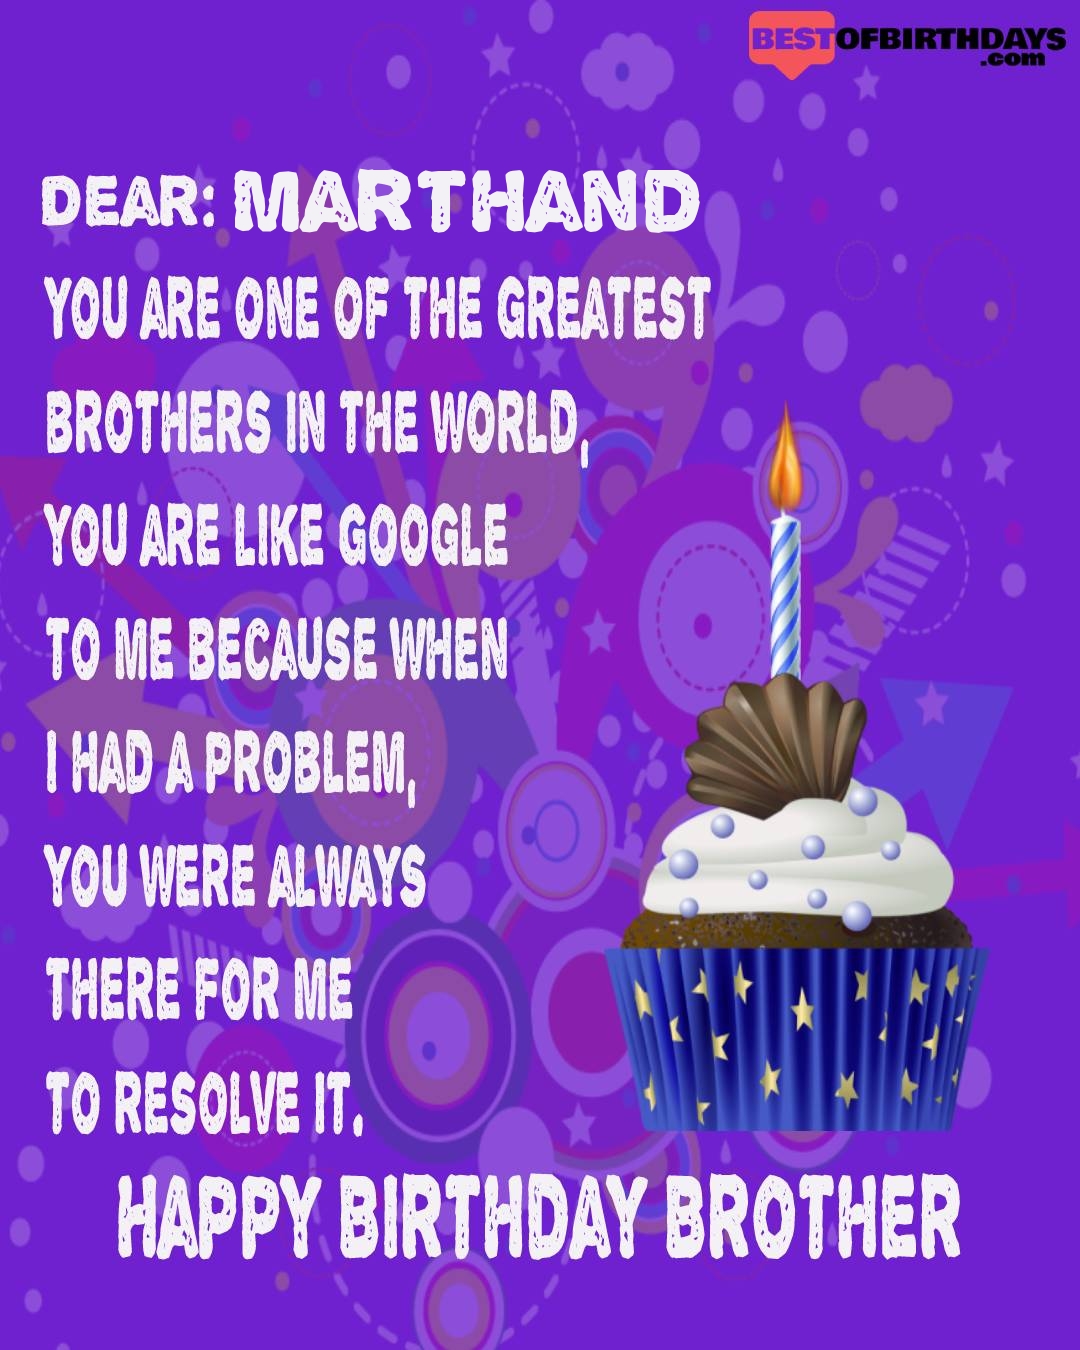 Happy birthday marthand bhai brother bro